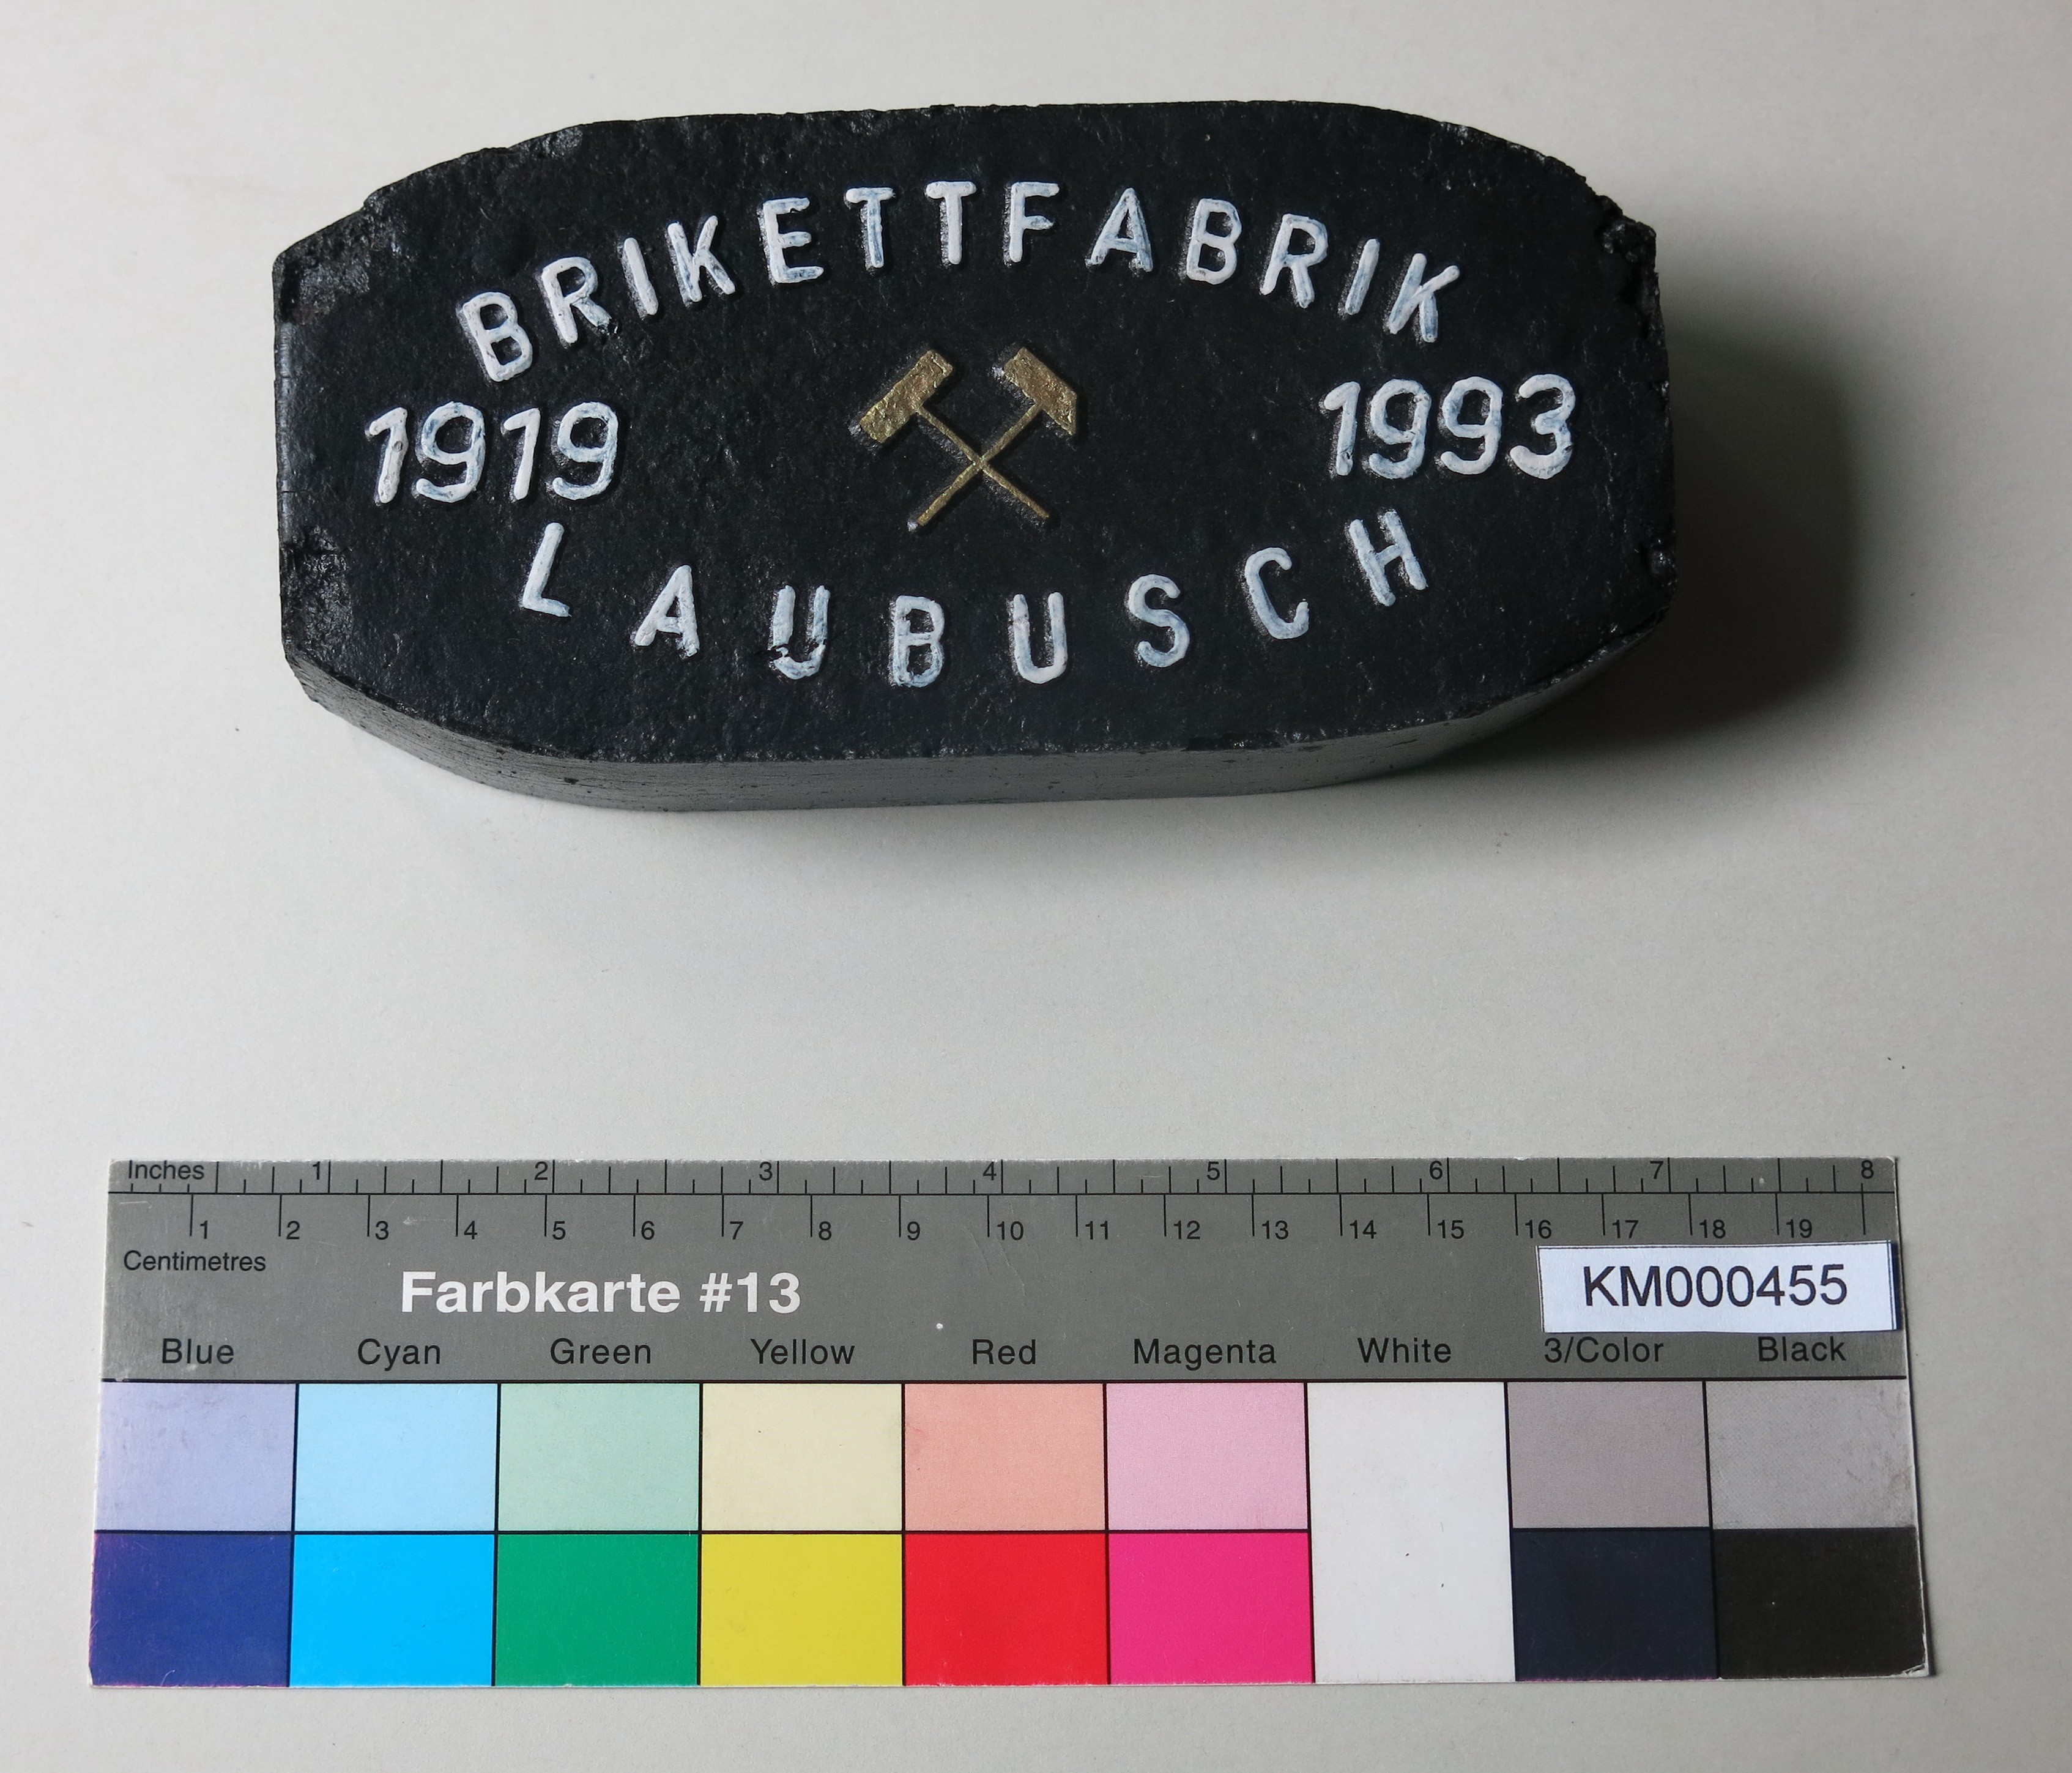 Zierbrikett "BRIKETTFABRIK 1919 1993 LAUBUSCH" (Energiefabrik Knappenrode CC BY-SA)